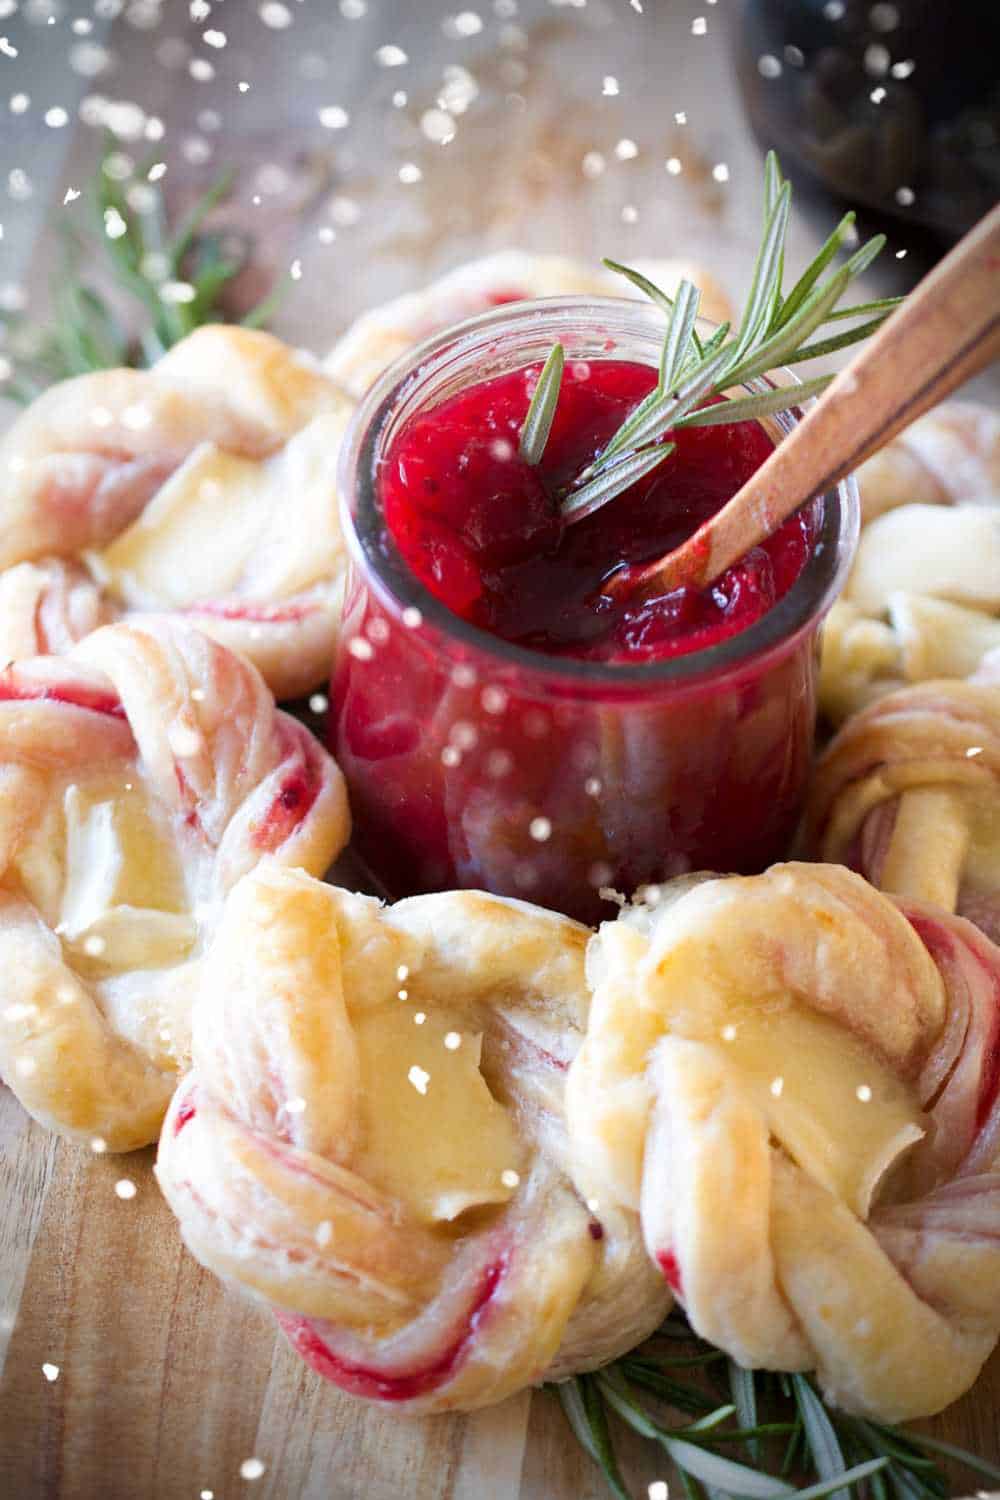 Cranberry and brie donut wreath around jar of cranberry jam.